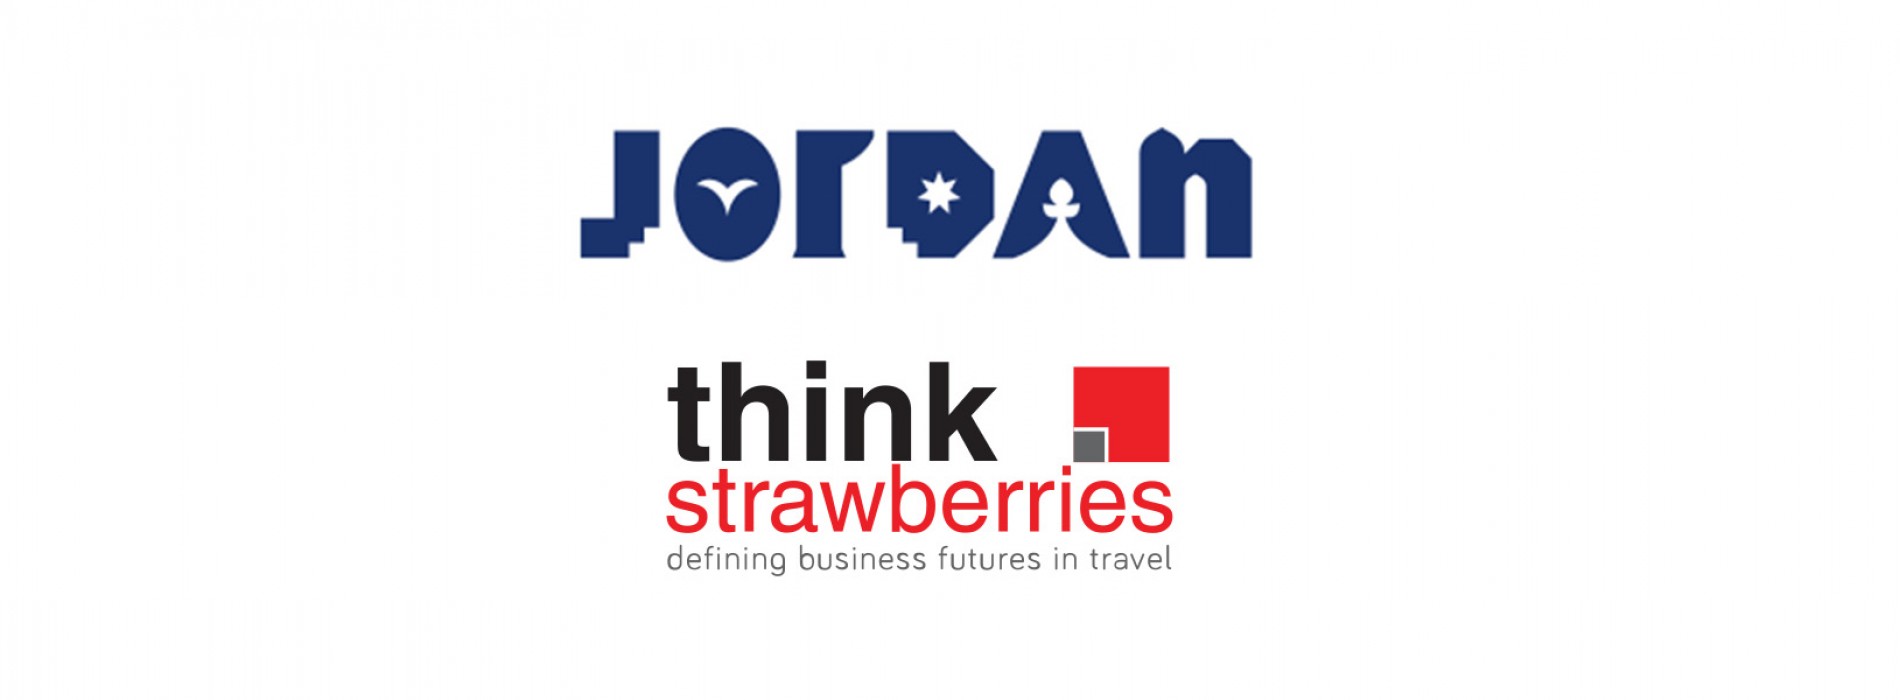 Jordan Tourism Board renews partnership with Think Strawberries as India Rep